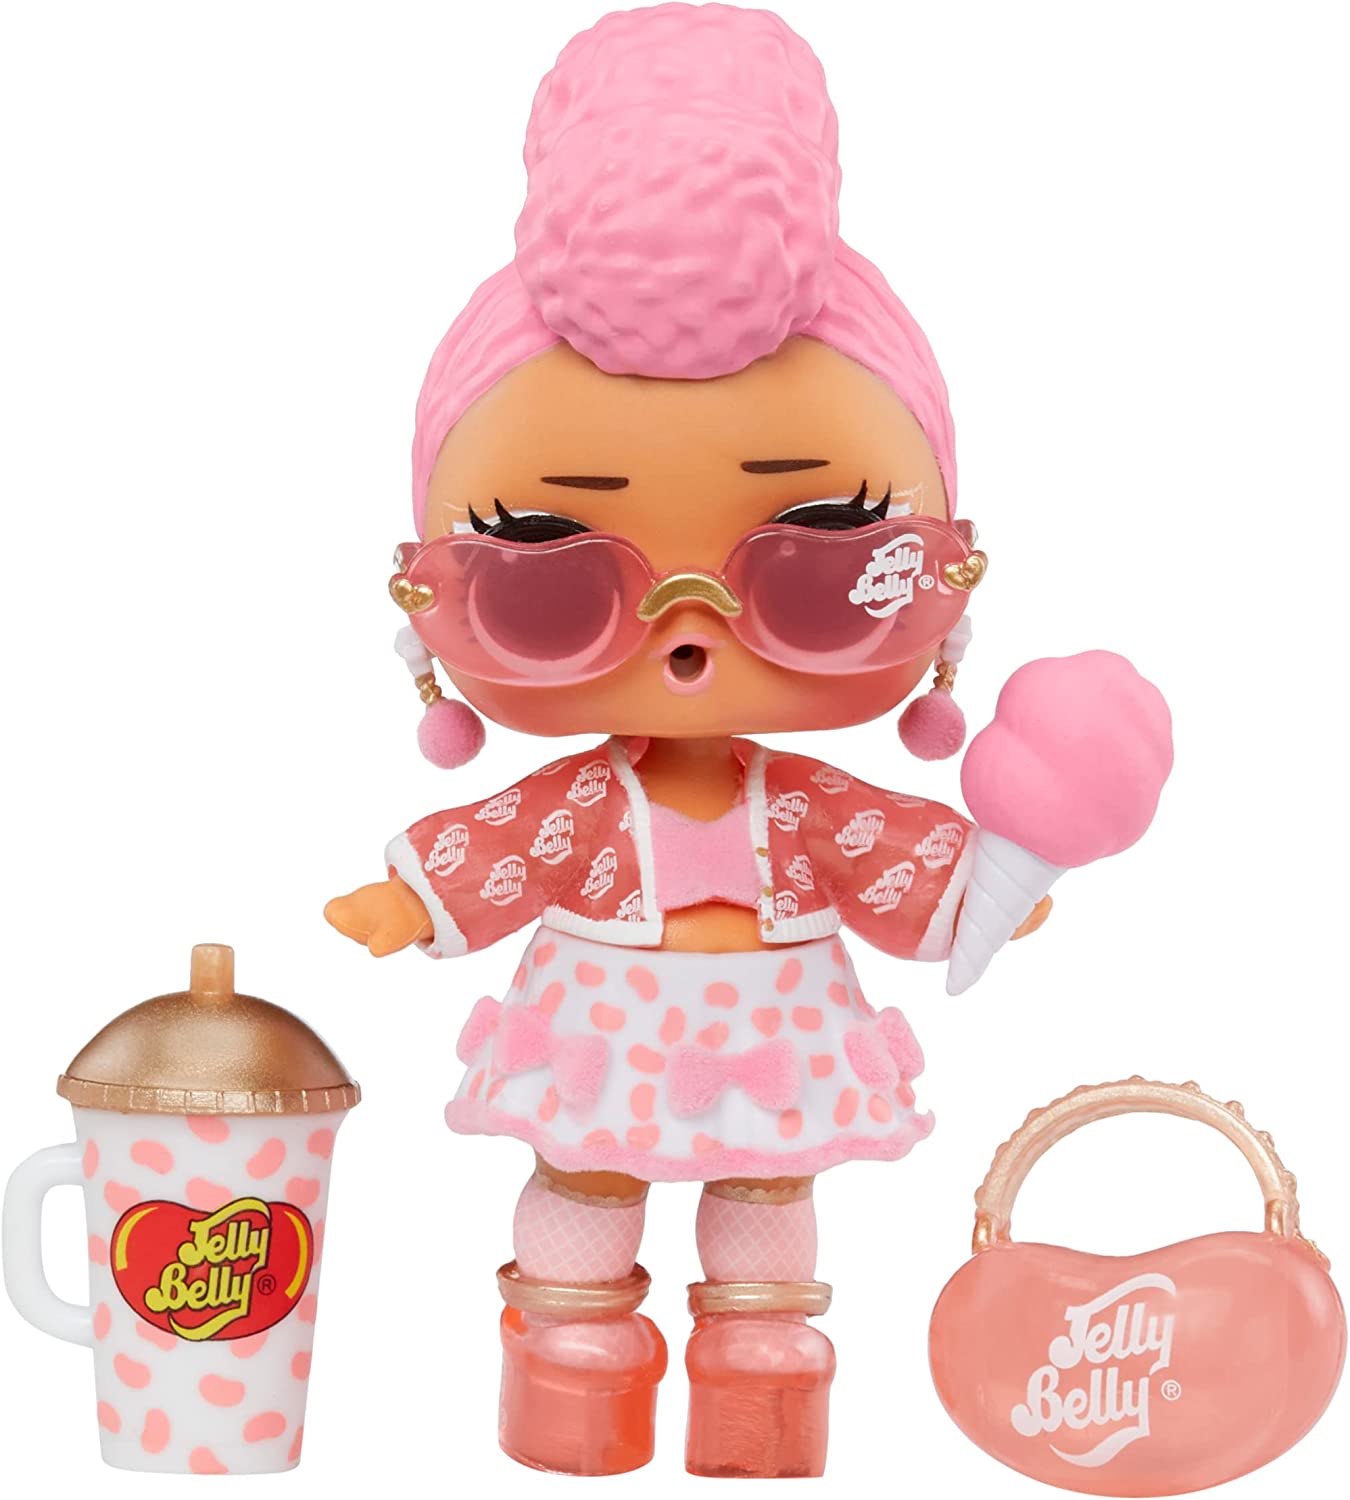 zuru surprize fashion mini brands series 1 ideal for Barbie/Cindy